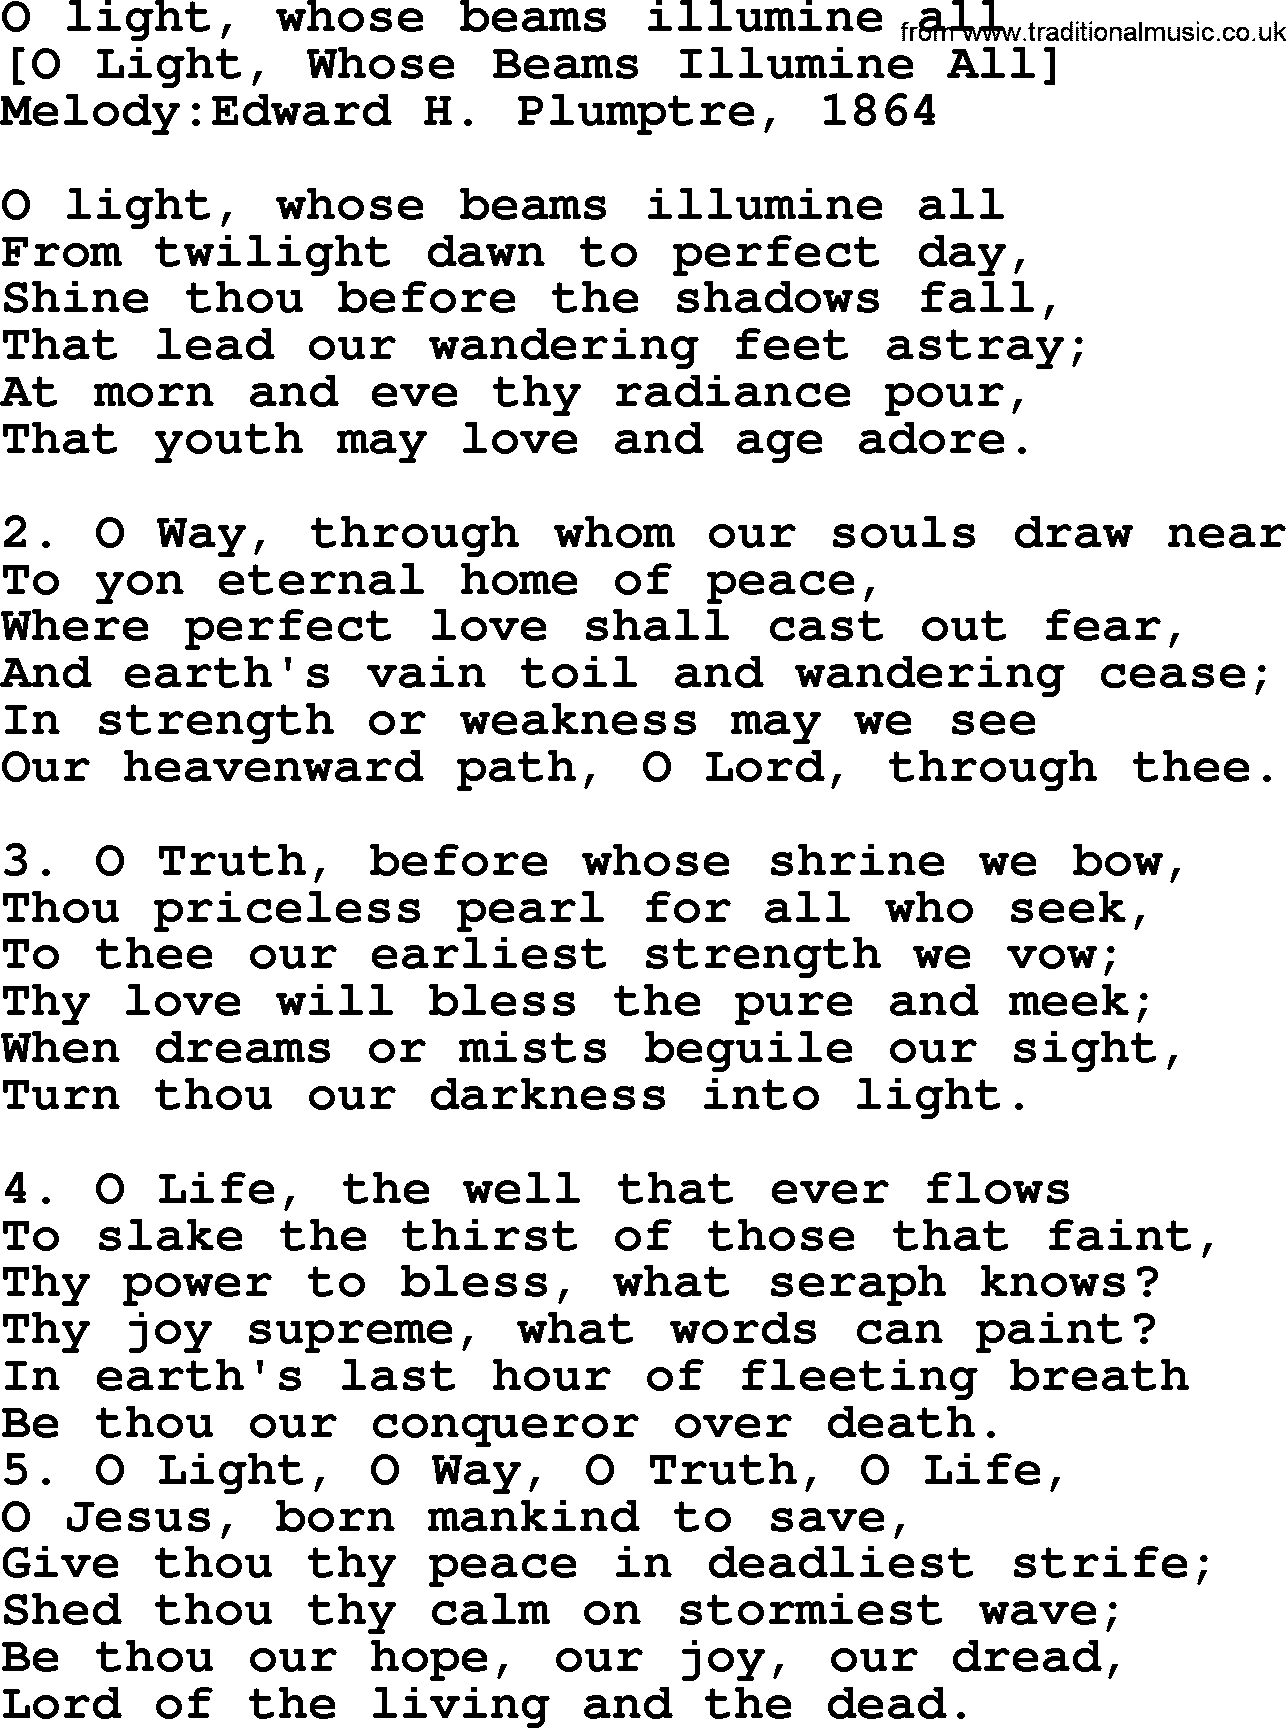 Old English Song: O Light, Whose Beams Illumine All lyrics